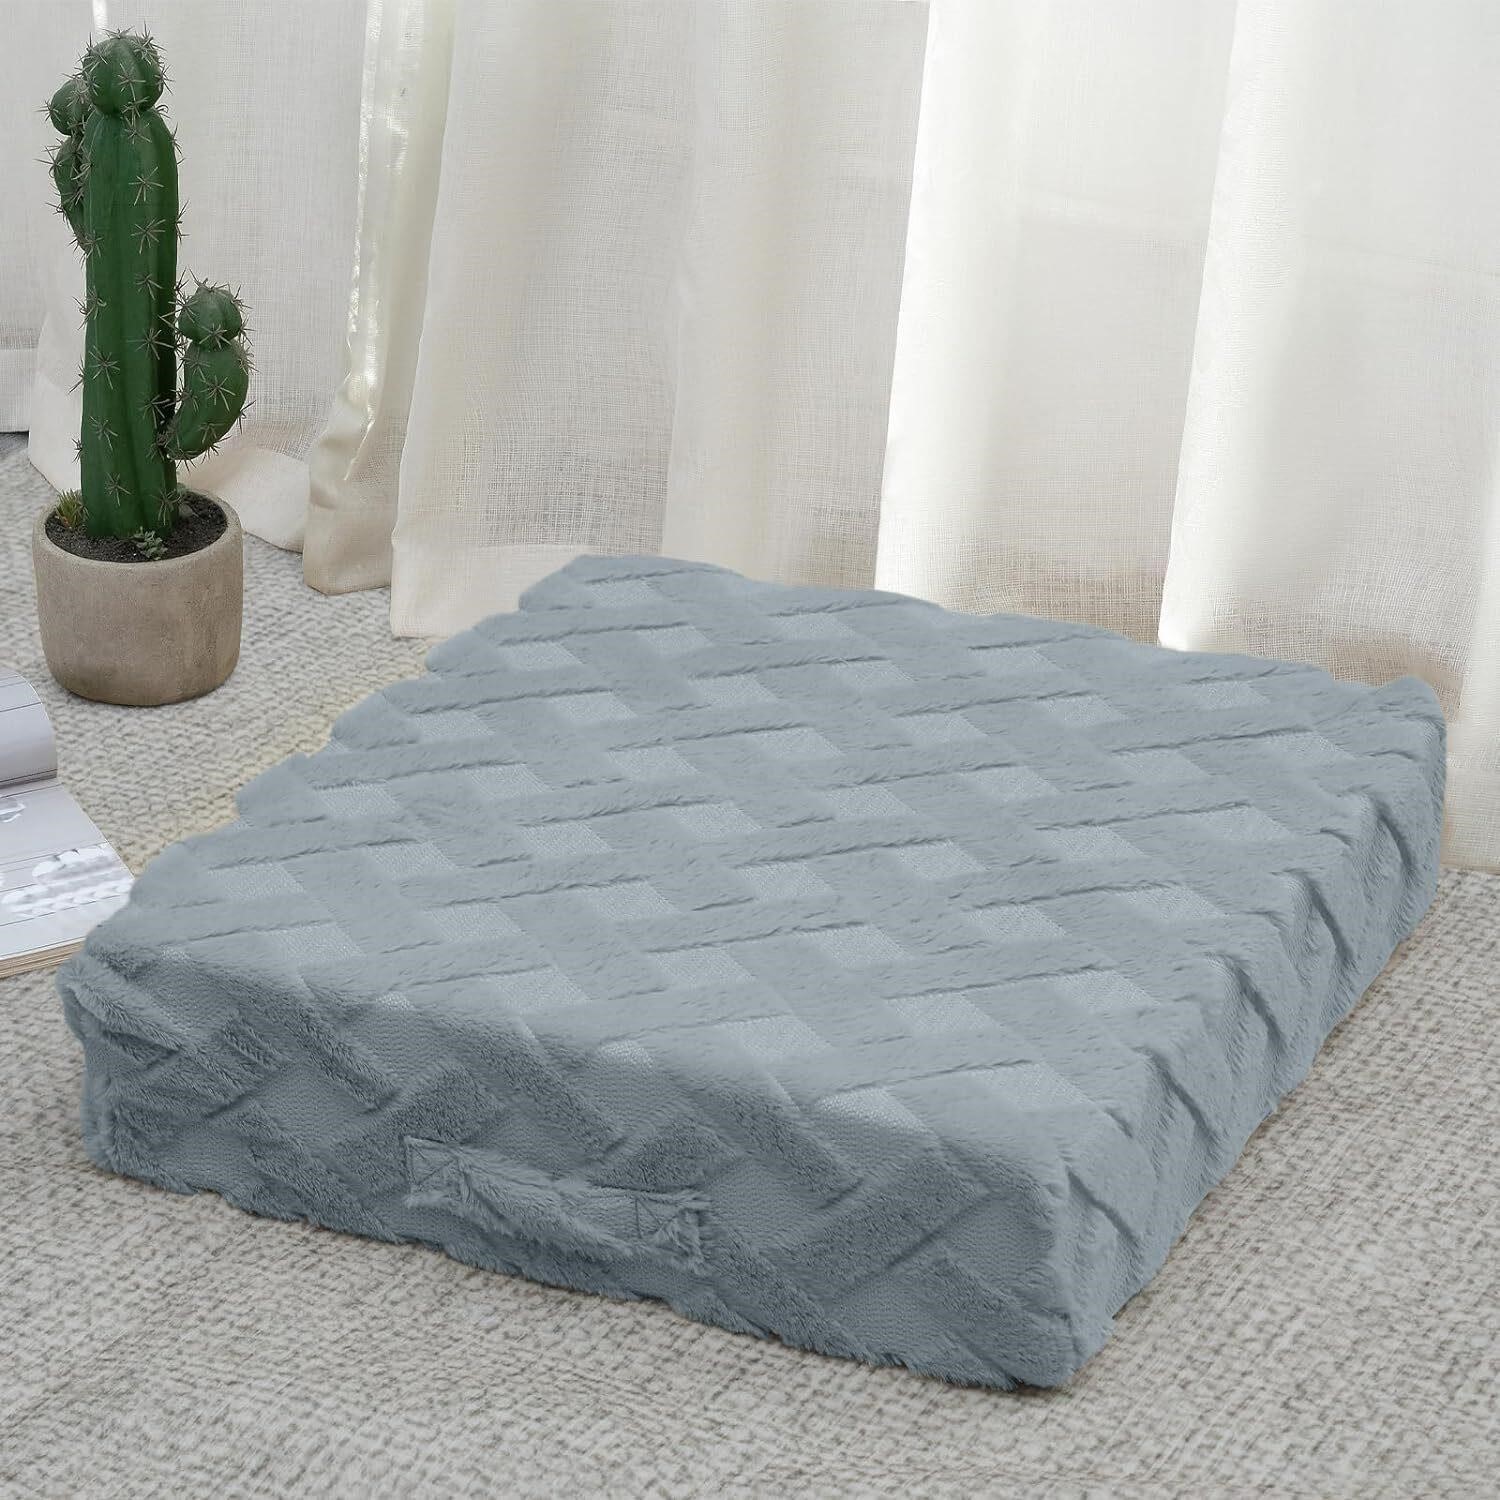 MeMoreCool Square Floor Pillow  24 Inches Grey